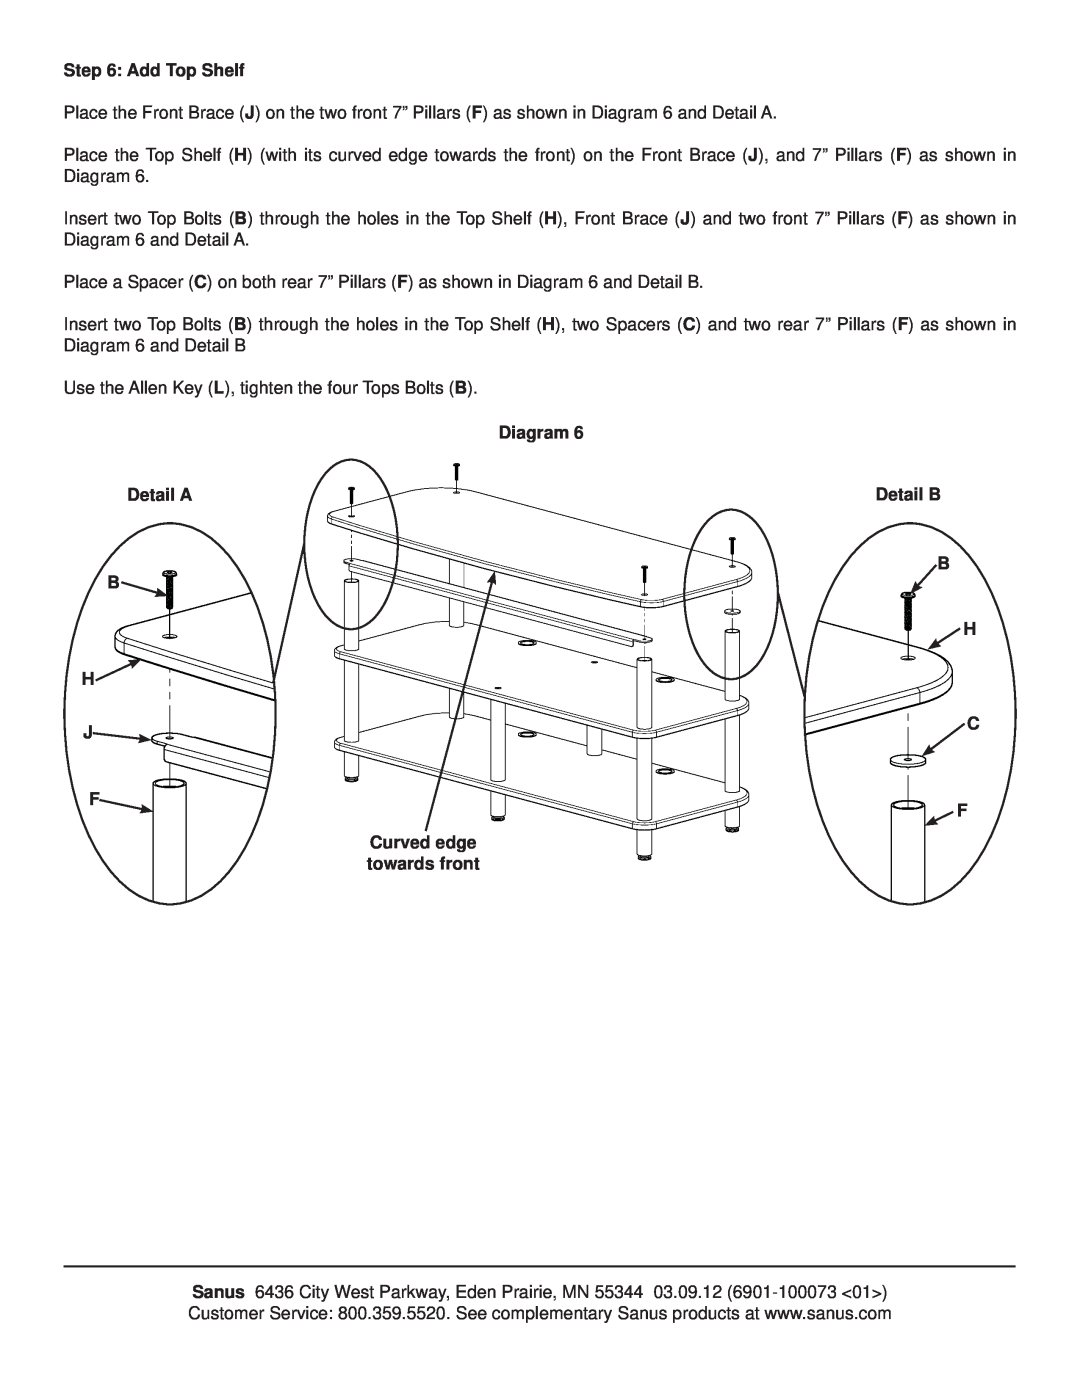 Sanus Systems AFV48B manual Add Top Shelf, Diagram Detail A B H J F Curved edge towards front, Detail B B H C F 